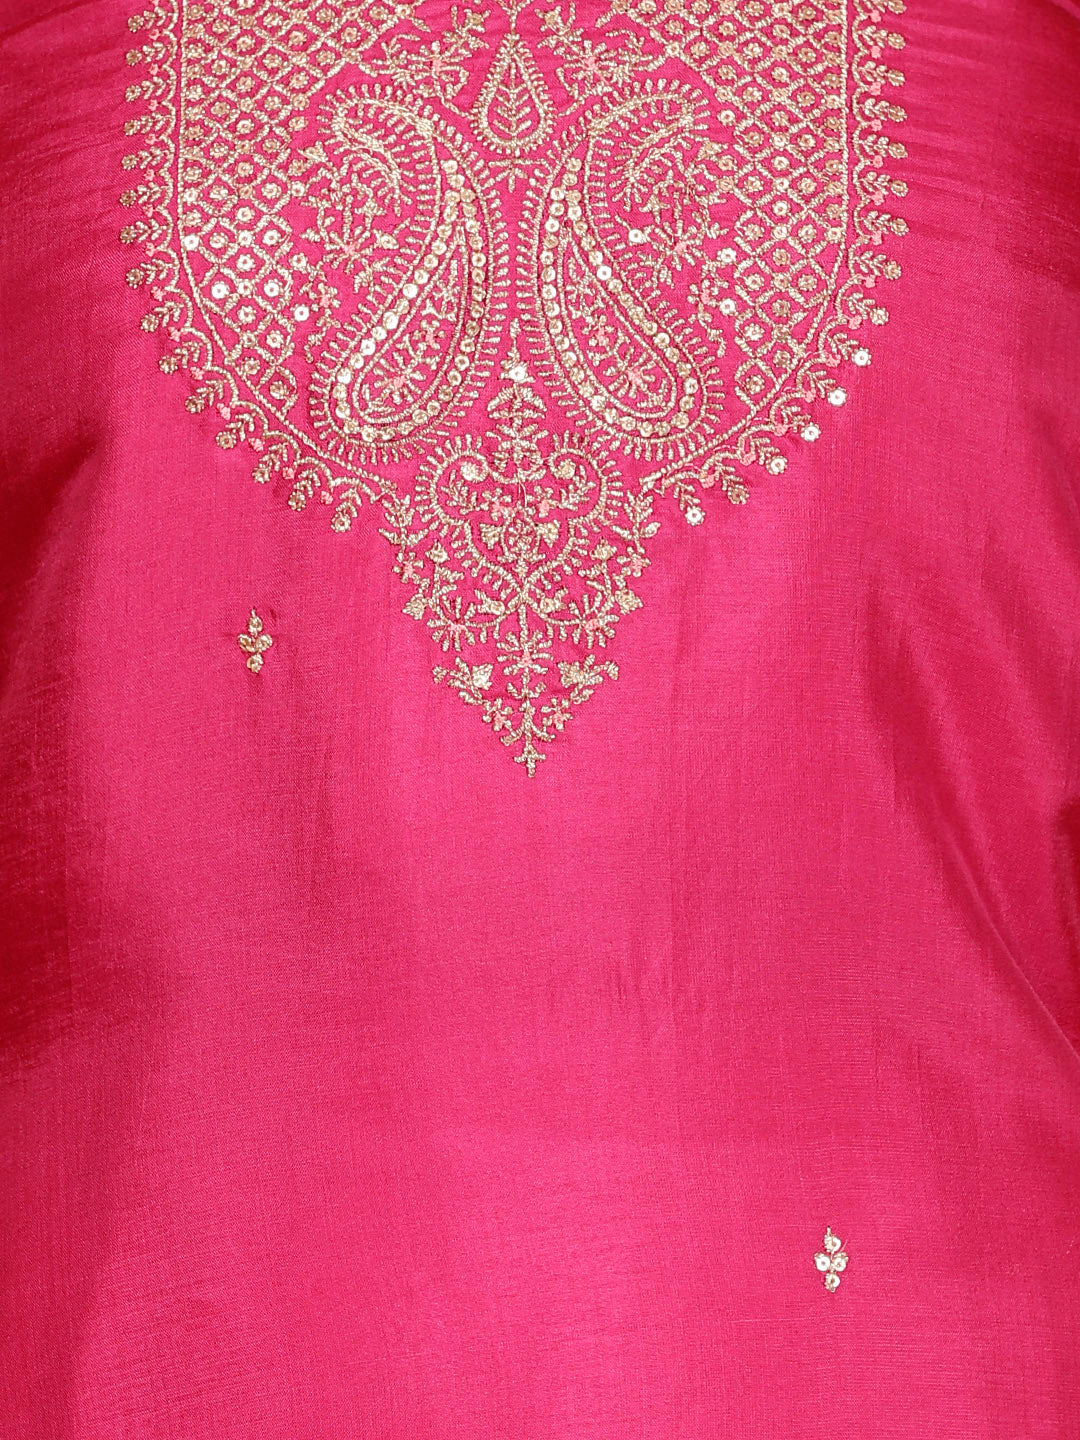 Neck Embroidery Chanderi Unstitched Suit Piece With Banarsi Dupatta